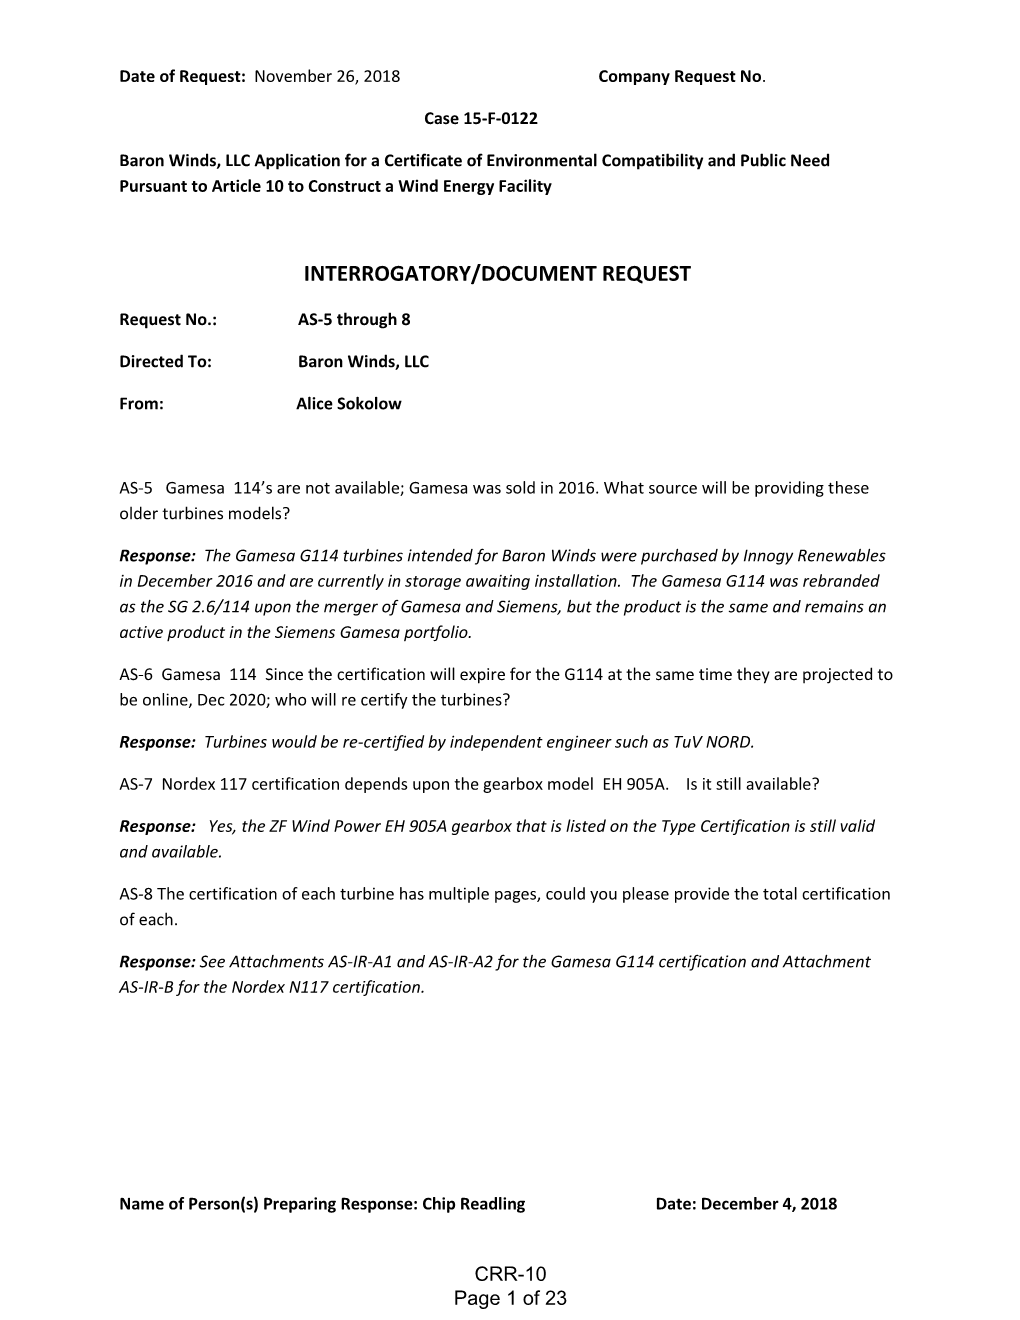 Interrogatory/Document Request